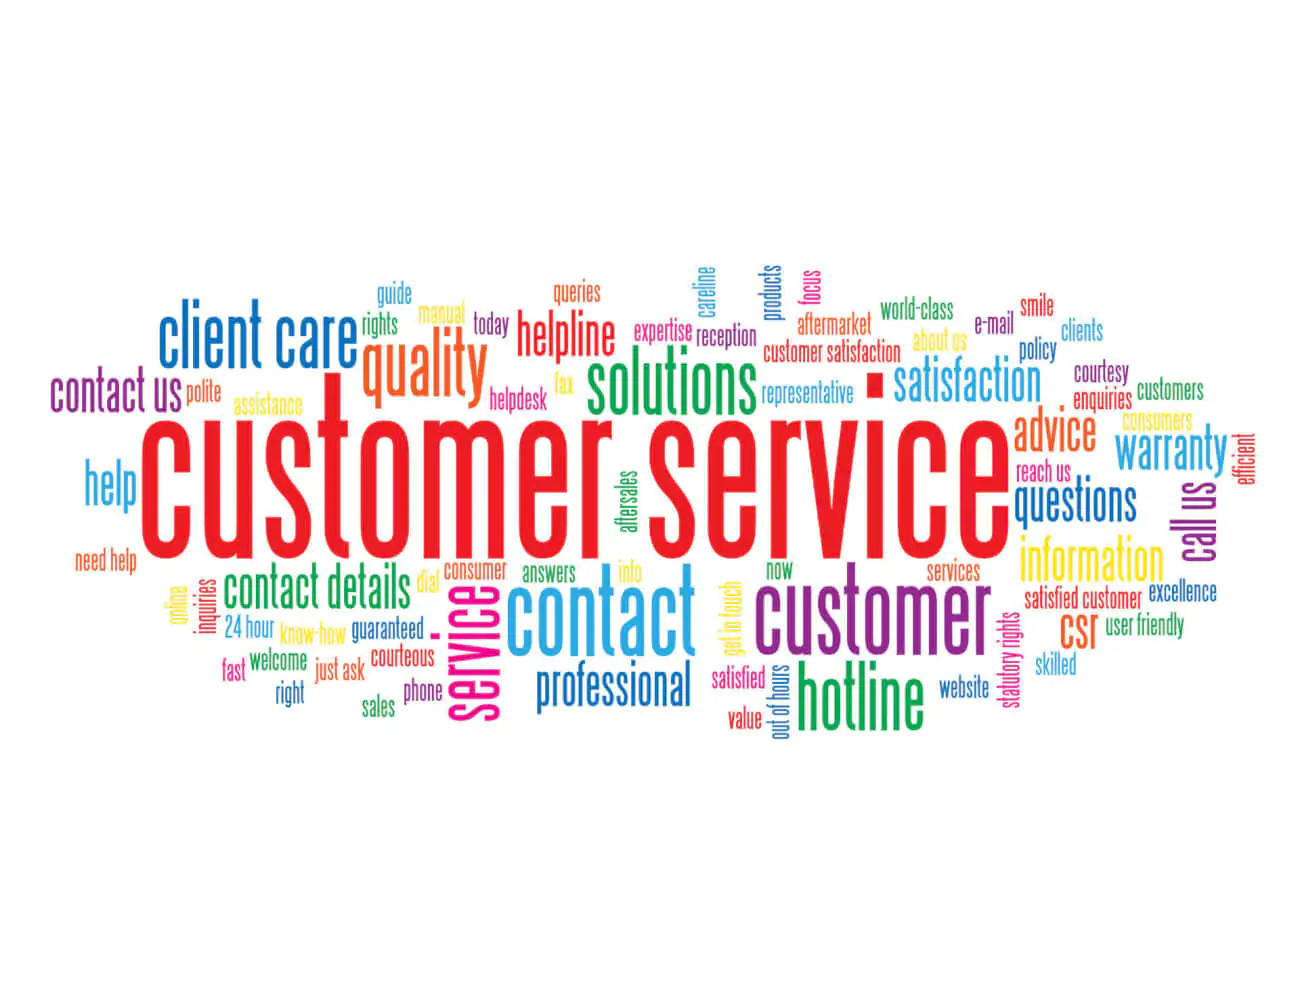 Excellent Customer Service Brand24 Blog